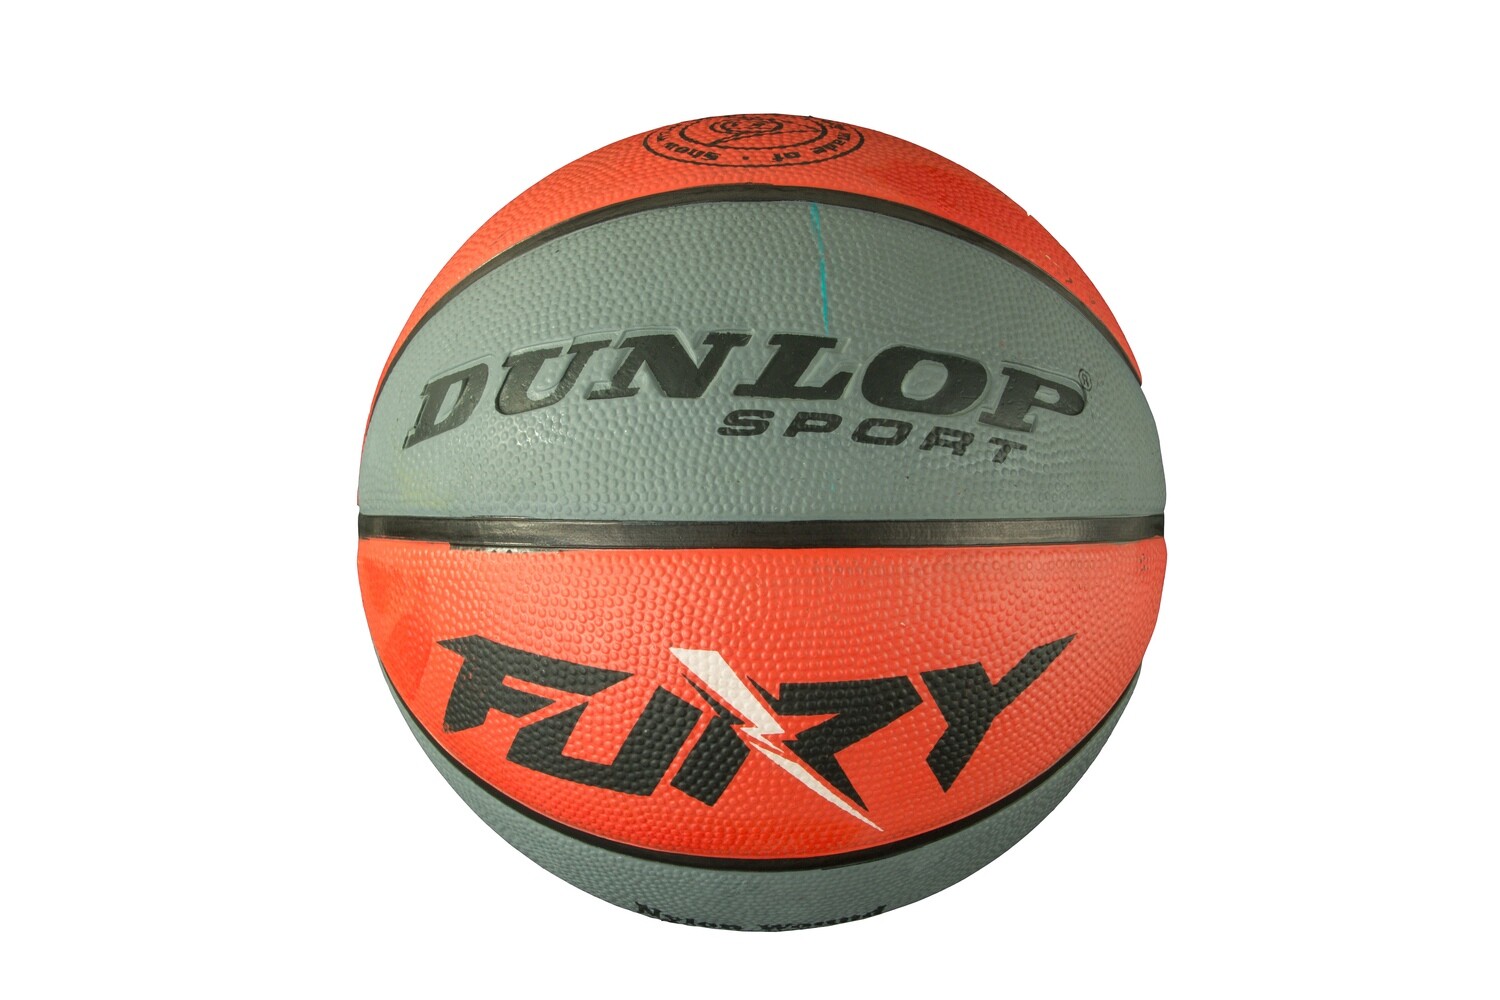 Dunlop Basketball Fury (Senior)